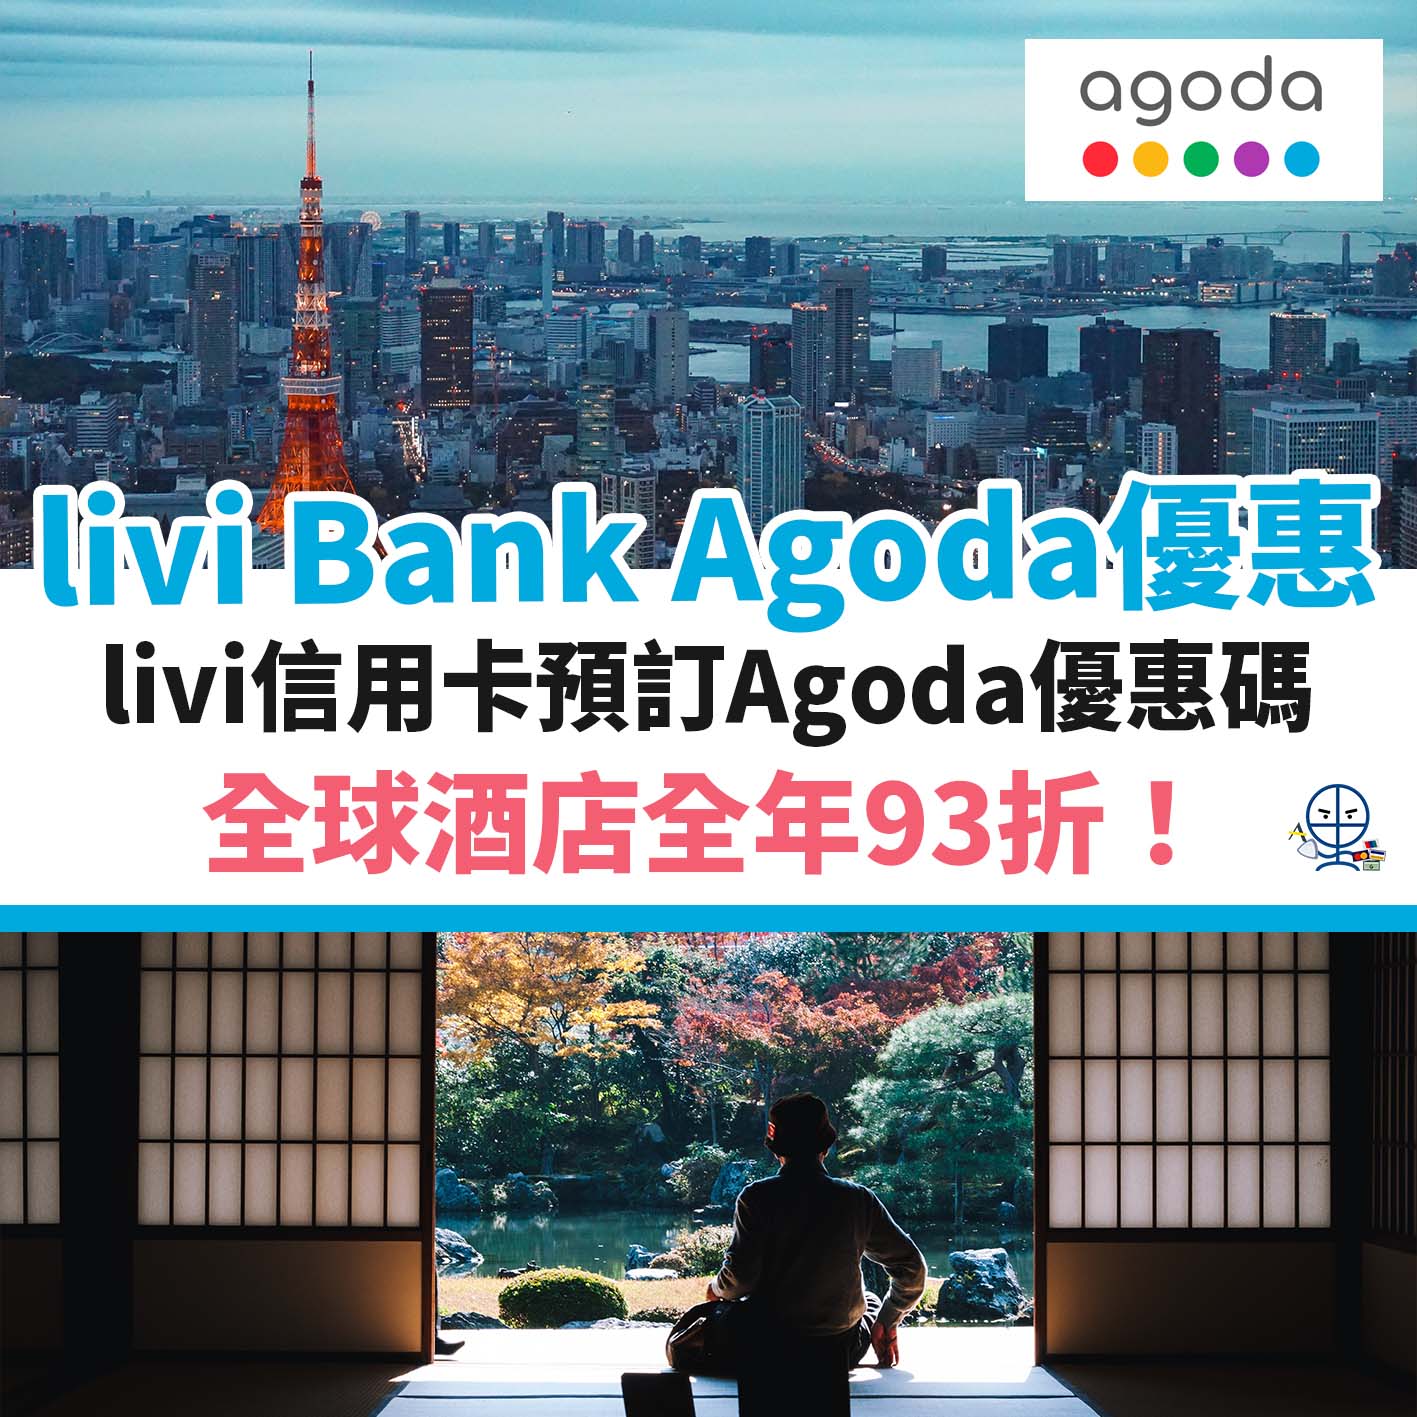 livi Bank Agoda code 優惠碼︱Agoda discount promo code 全年優惠93折！[mn]月最新